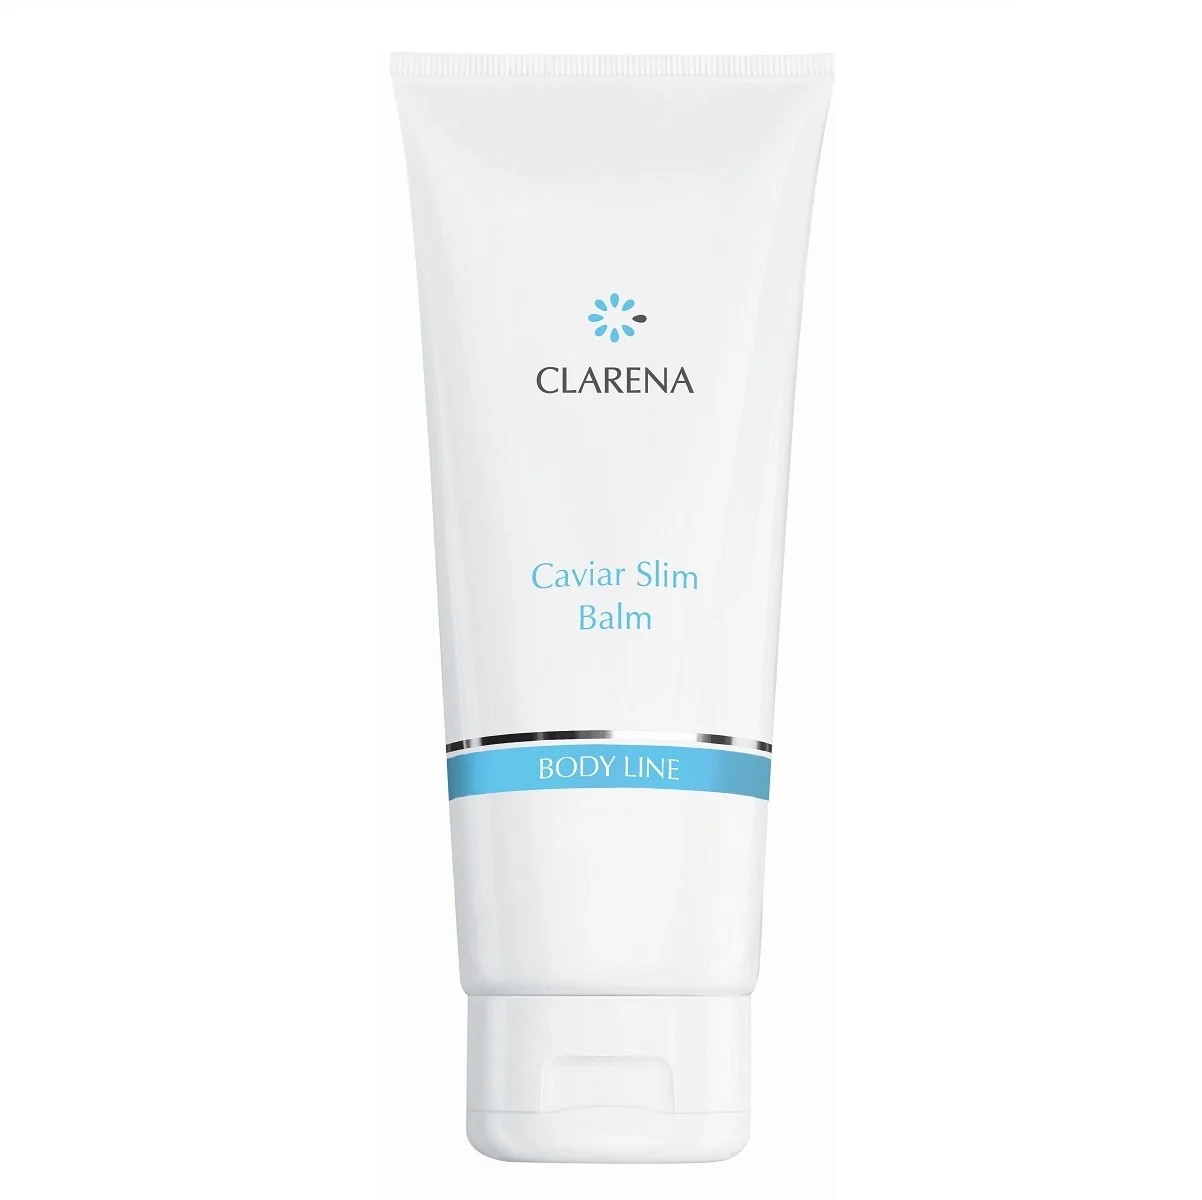 Clarena Body Slim Line Caviar Slimming Body Balm 200ml